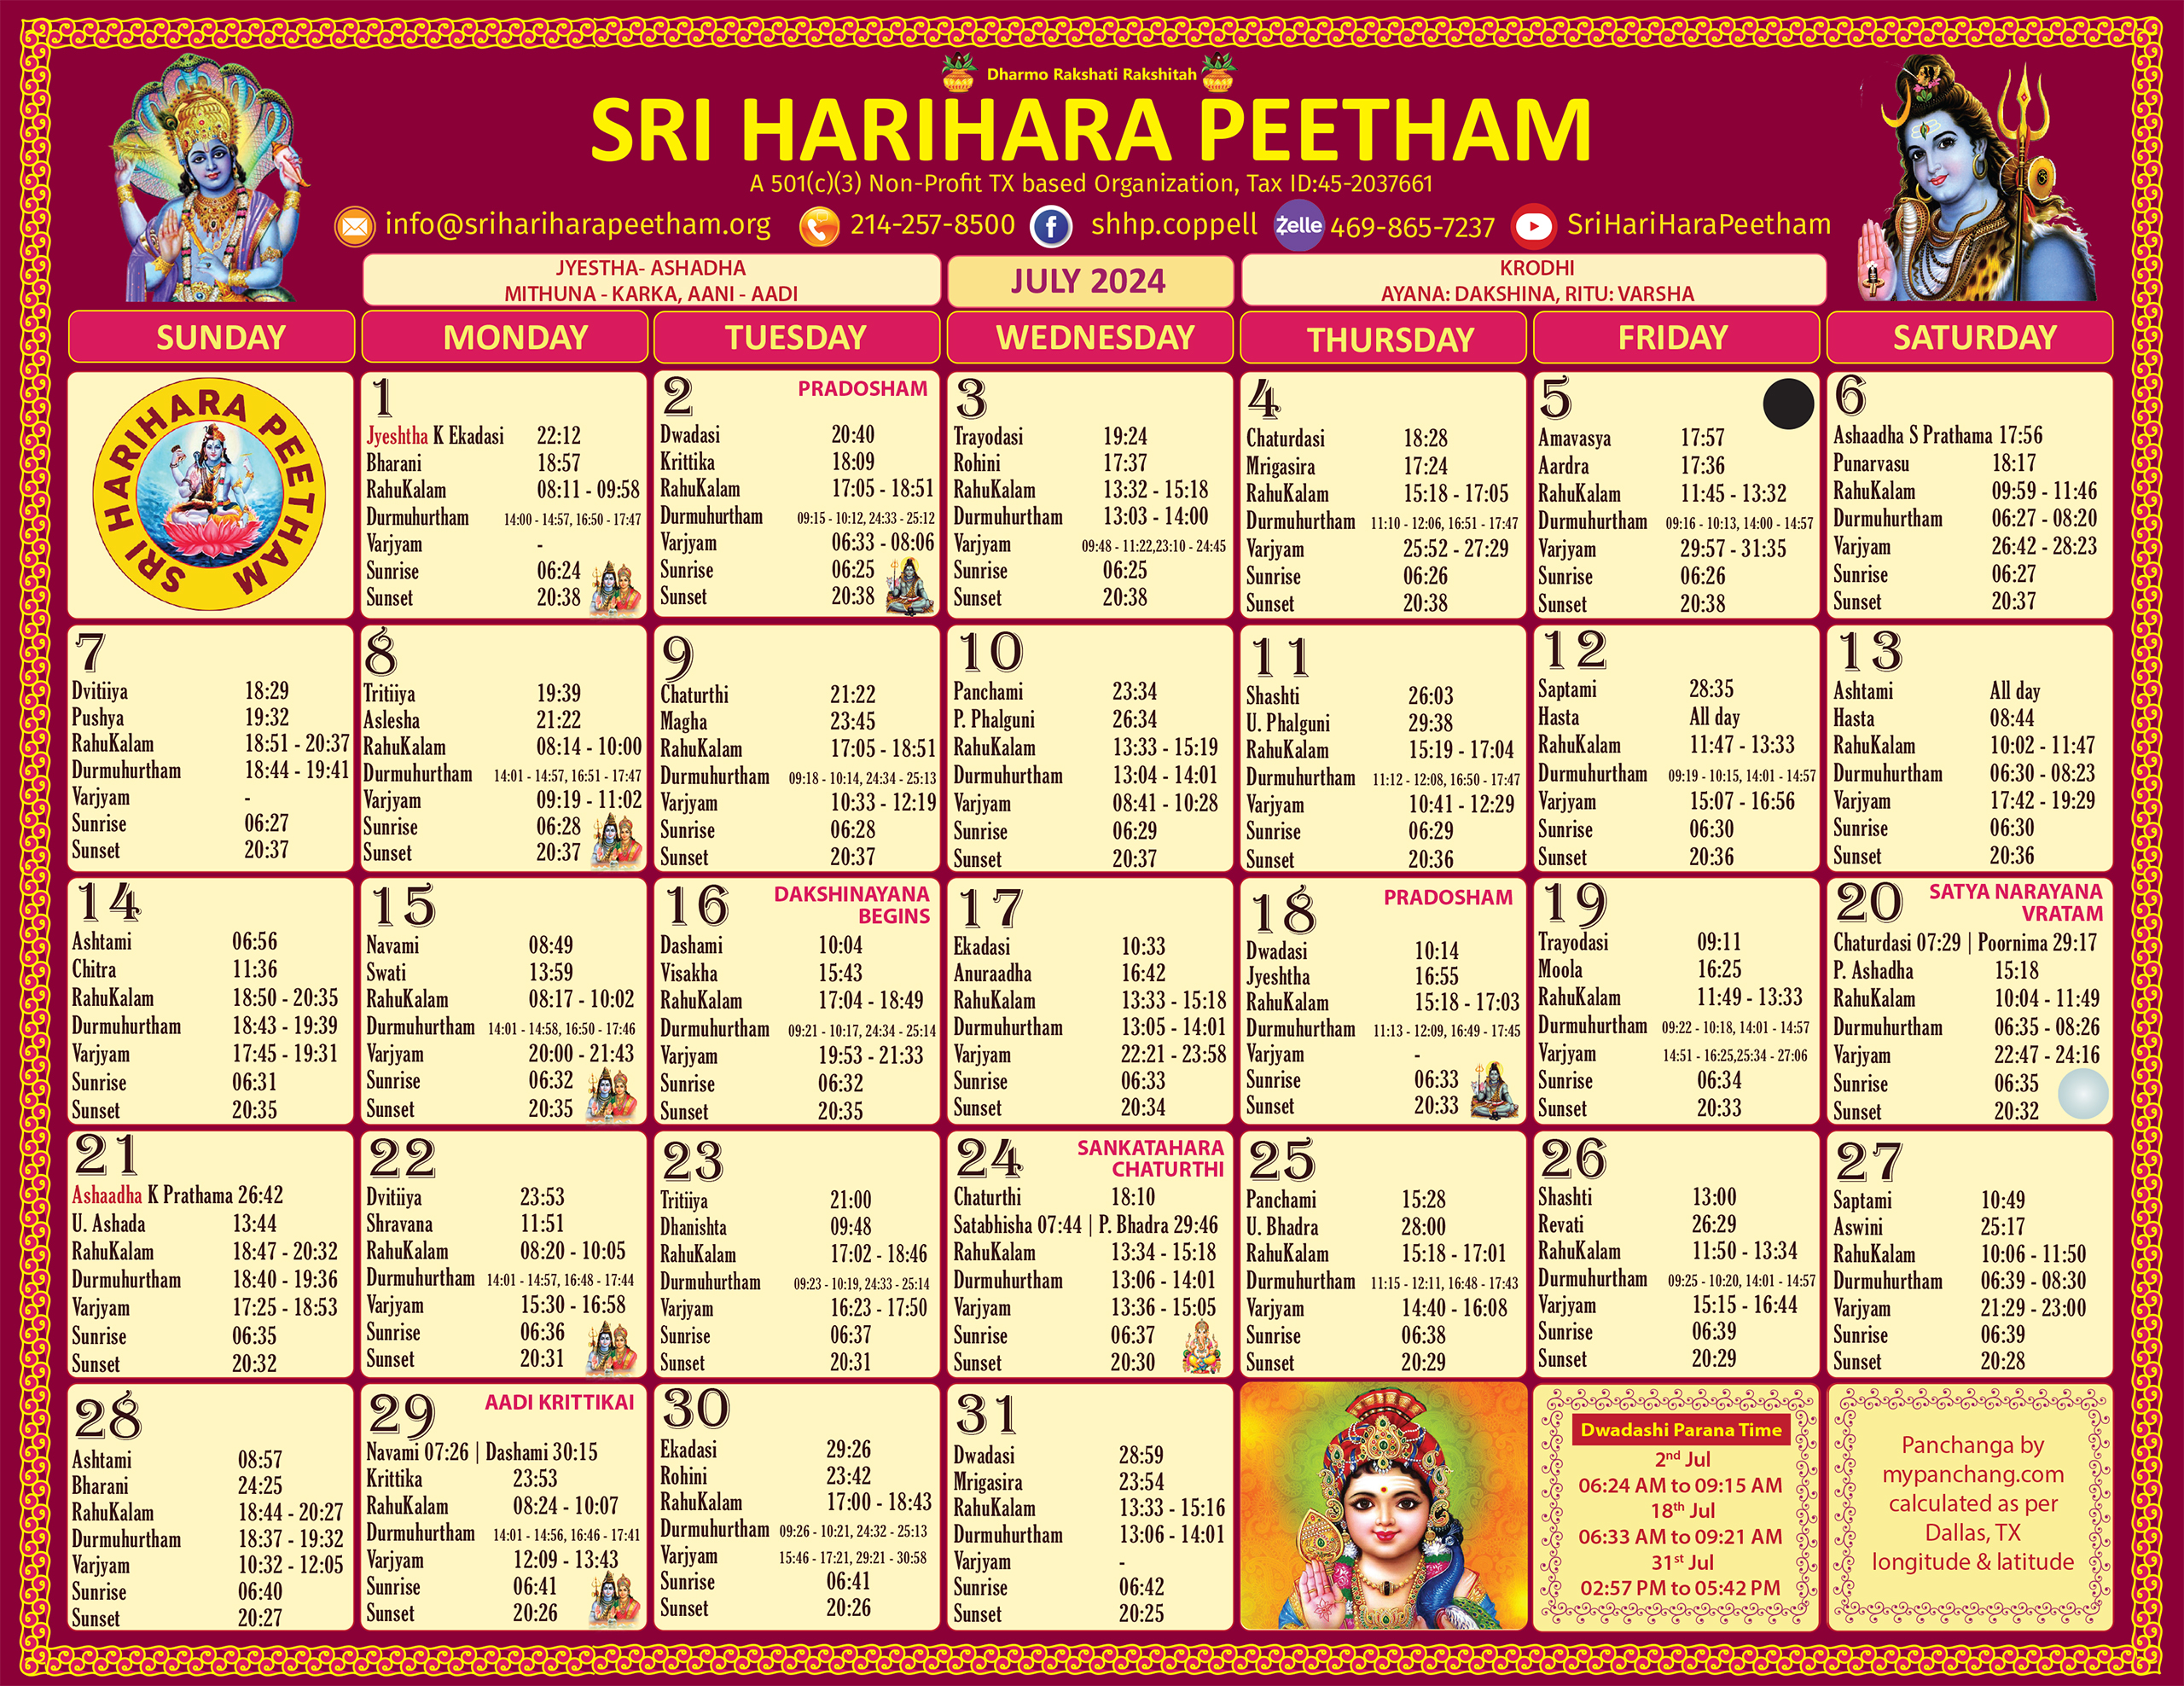 Sri HariHara Peetham's July 2024 calendar page